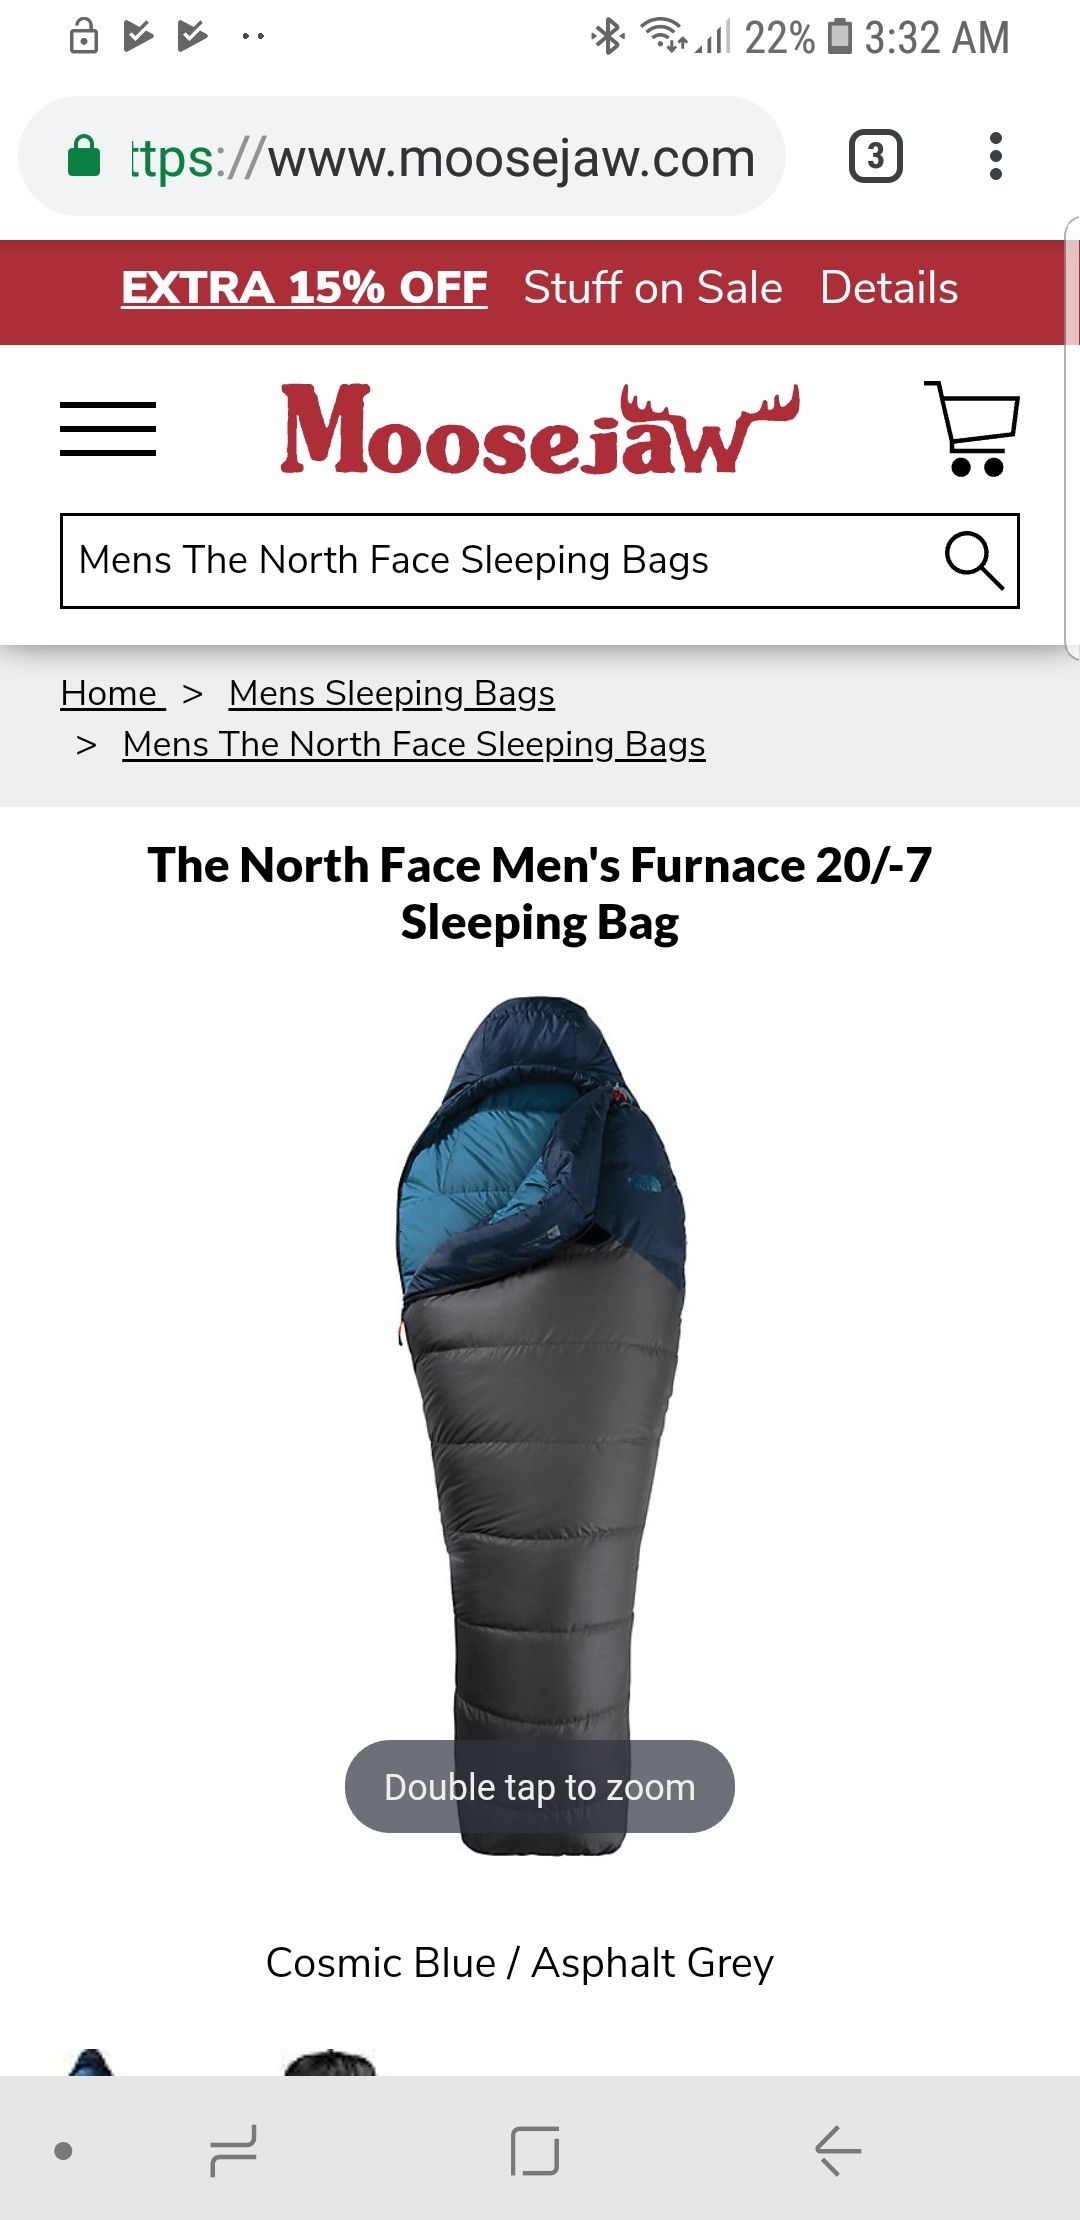 The Northface sleeping bag